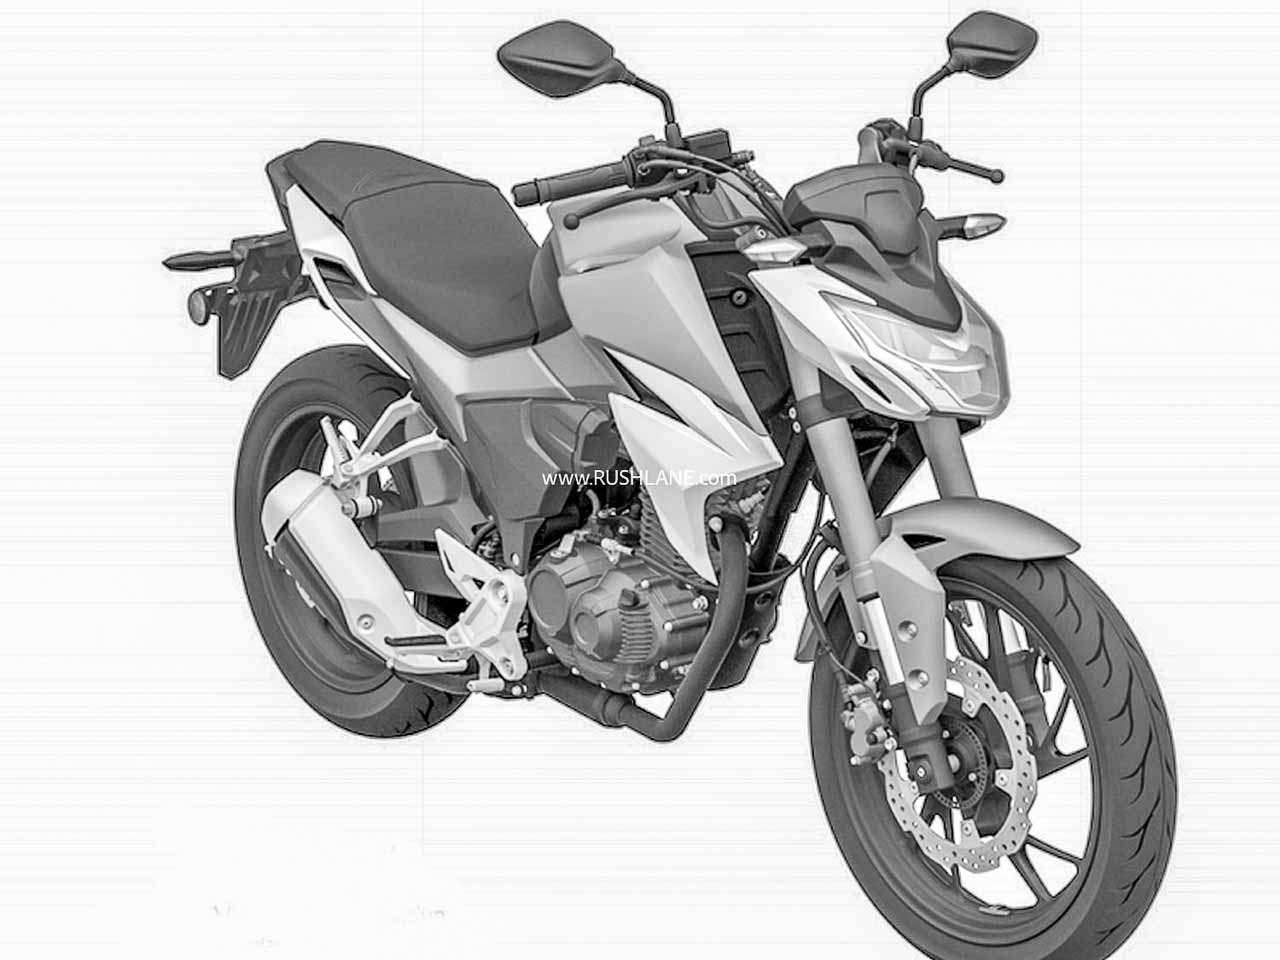 New Honda 200cc Motorcycle Launch Soon - Rival Bajaj ...